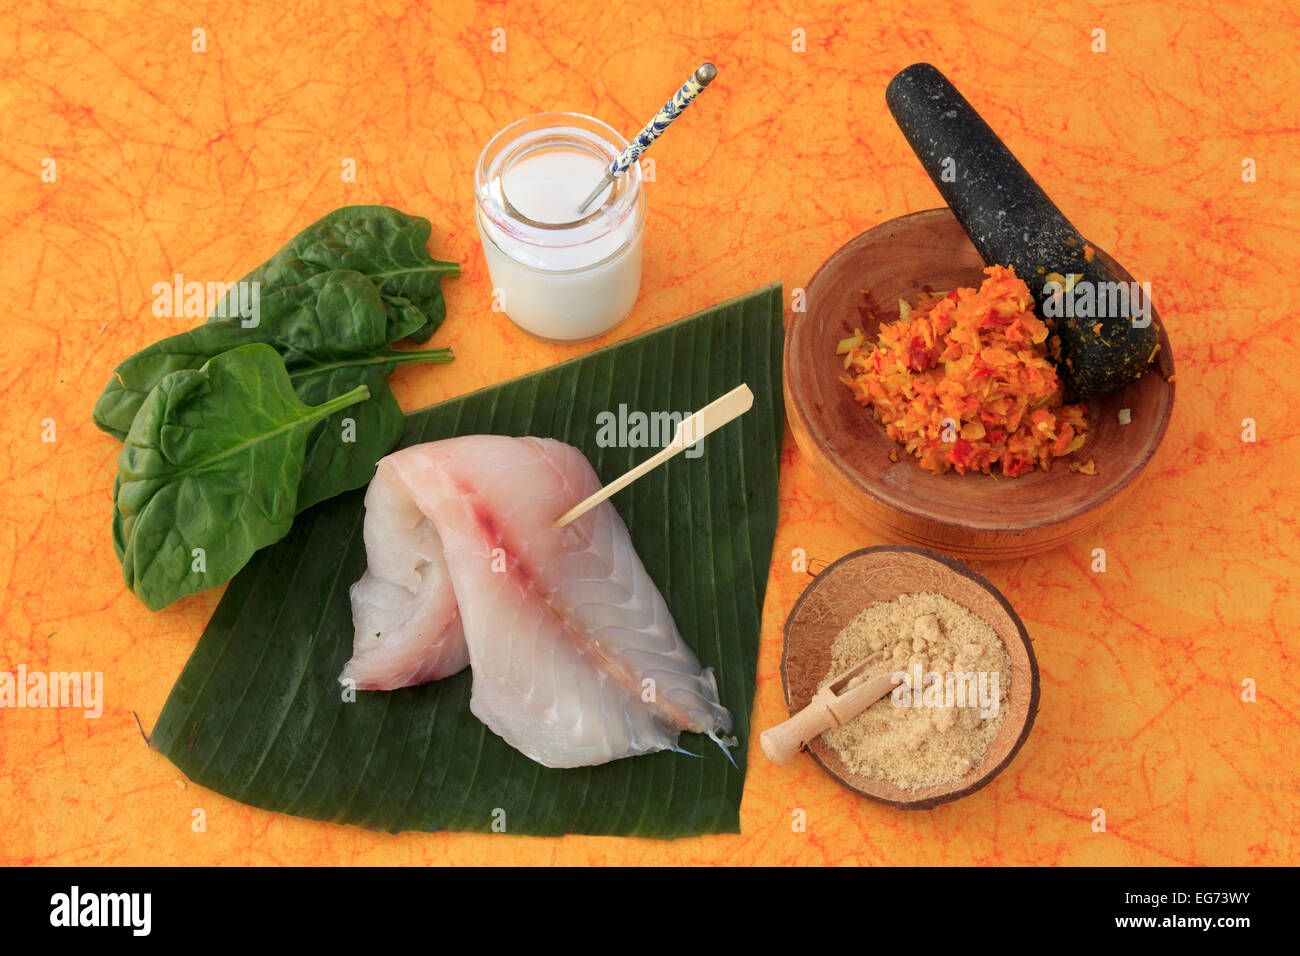 Amok, Cambodian dish, ingredients, fish, banana leaf, spinach, coconut milk, palm sugar, spice mix, mortar, Stock Photo